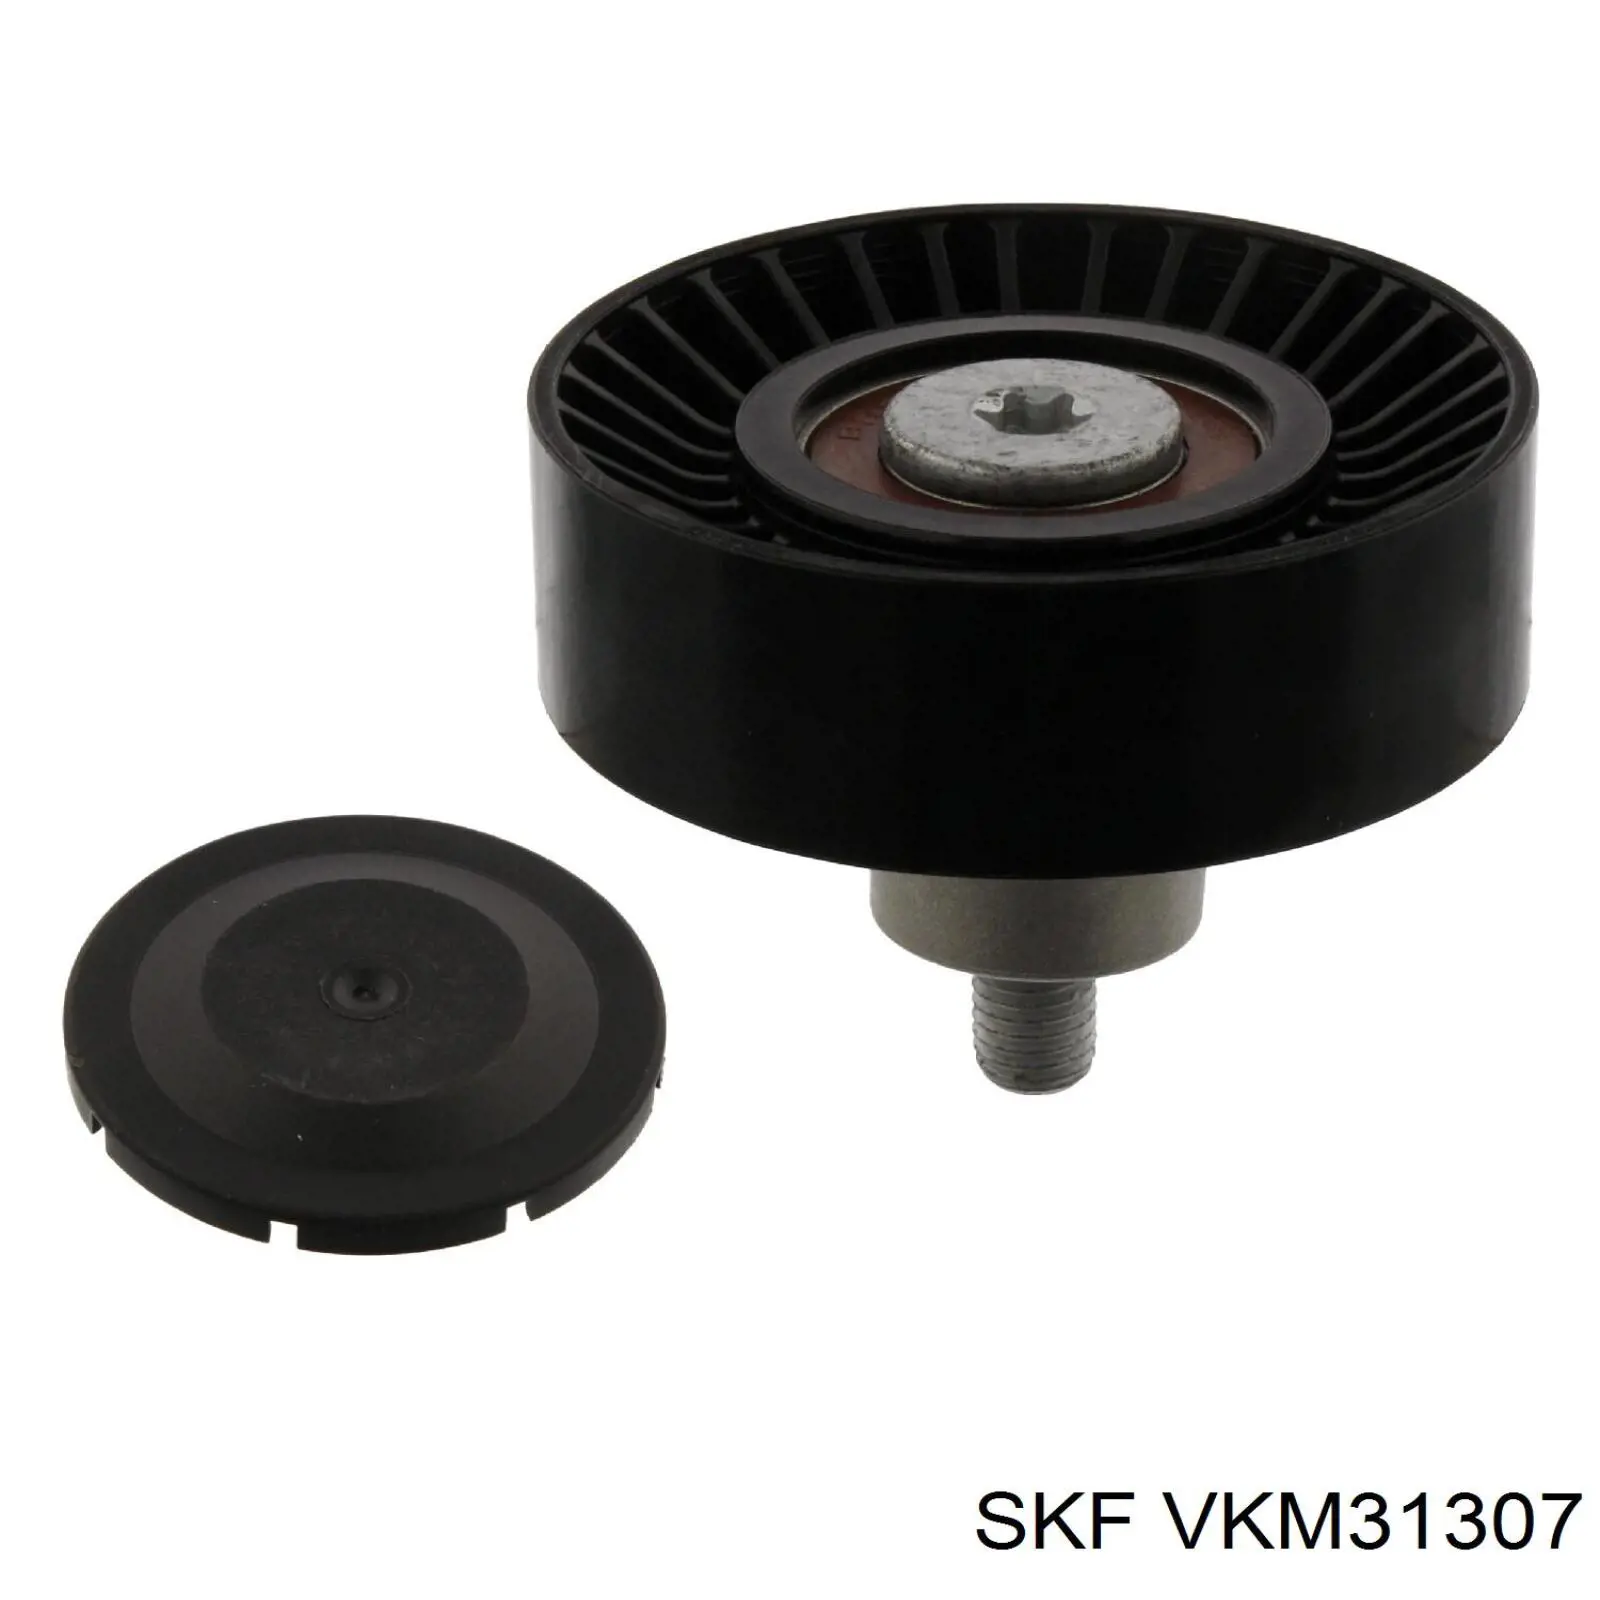 VKM 31307 SKF polea inversión / guía, correa poli v